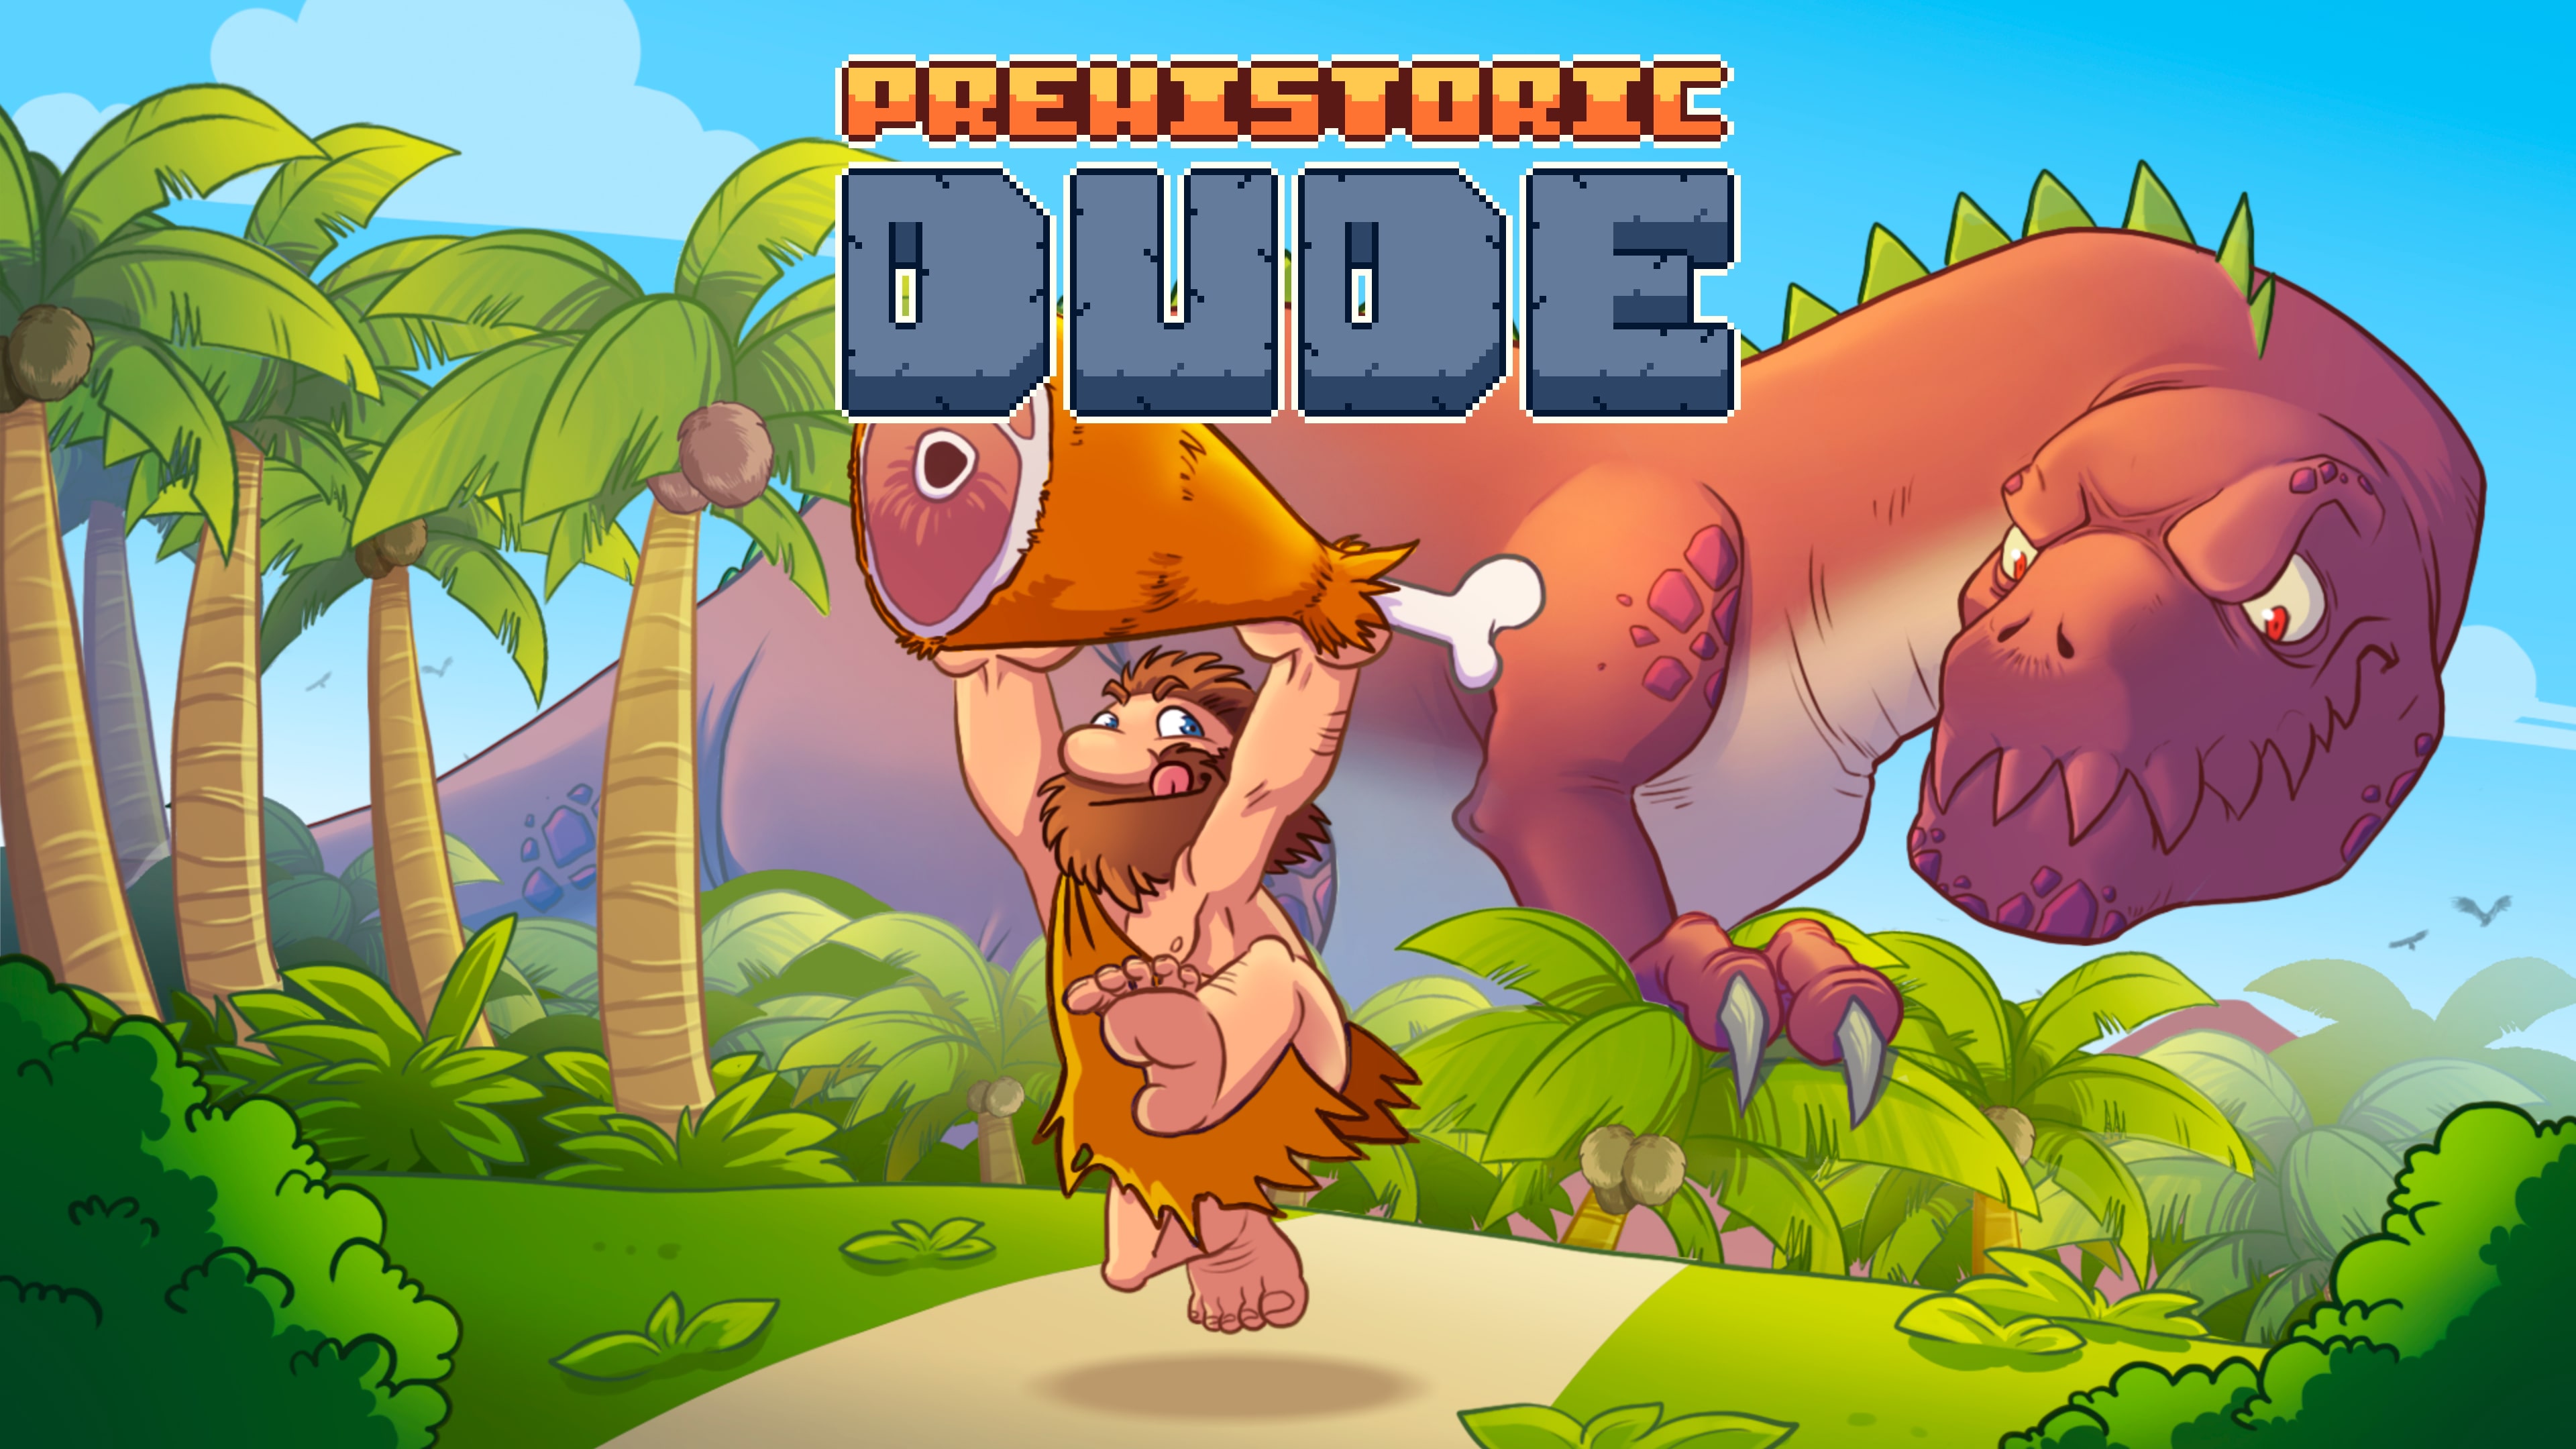 Prehistoric Dude (English)